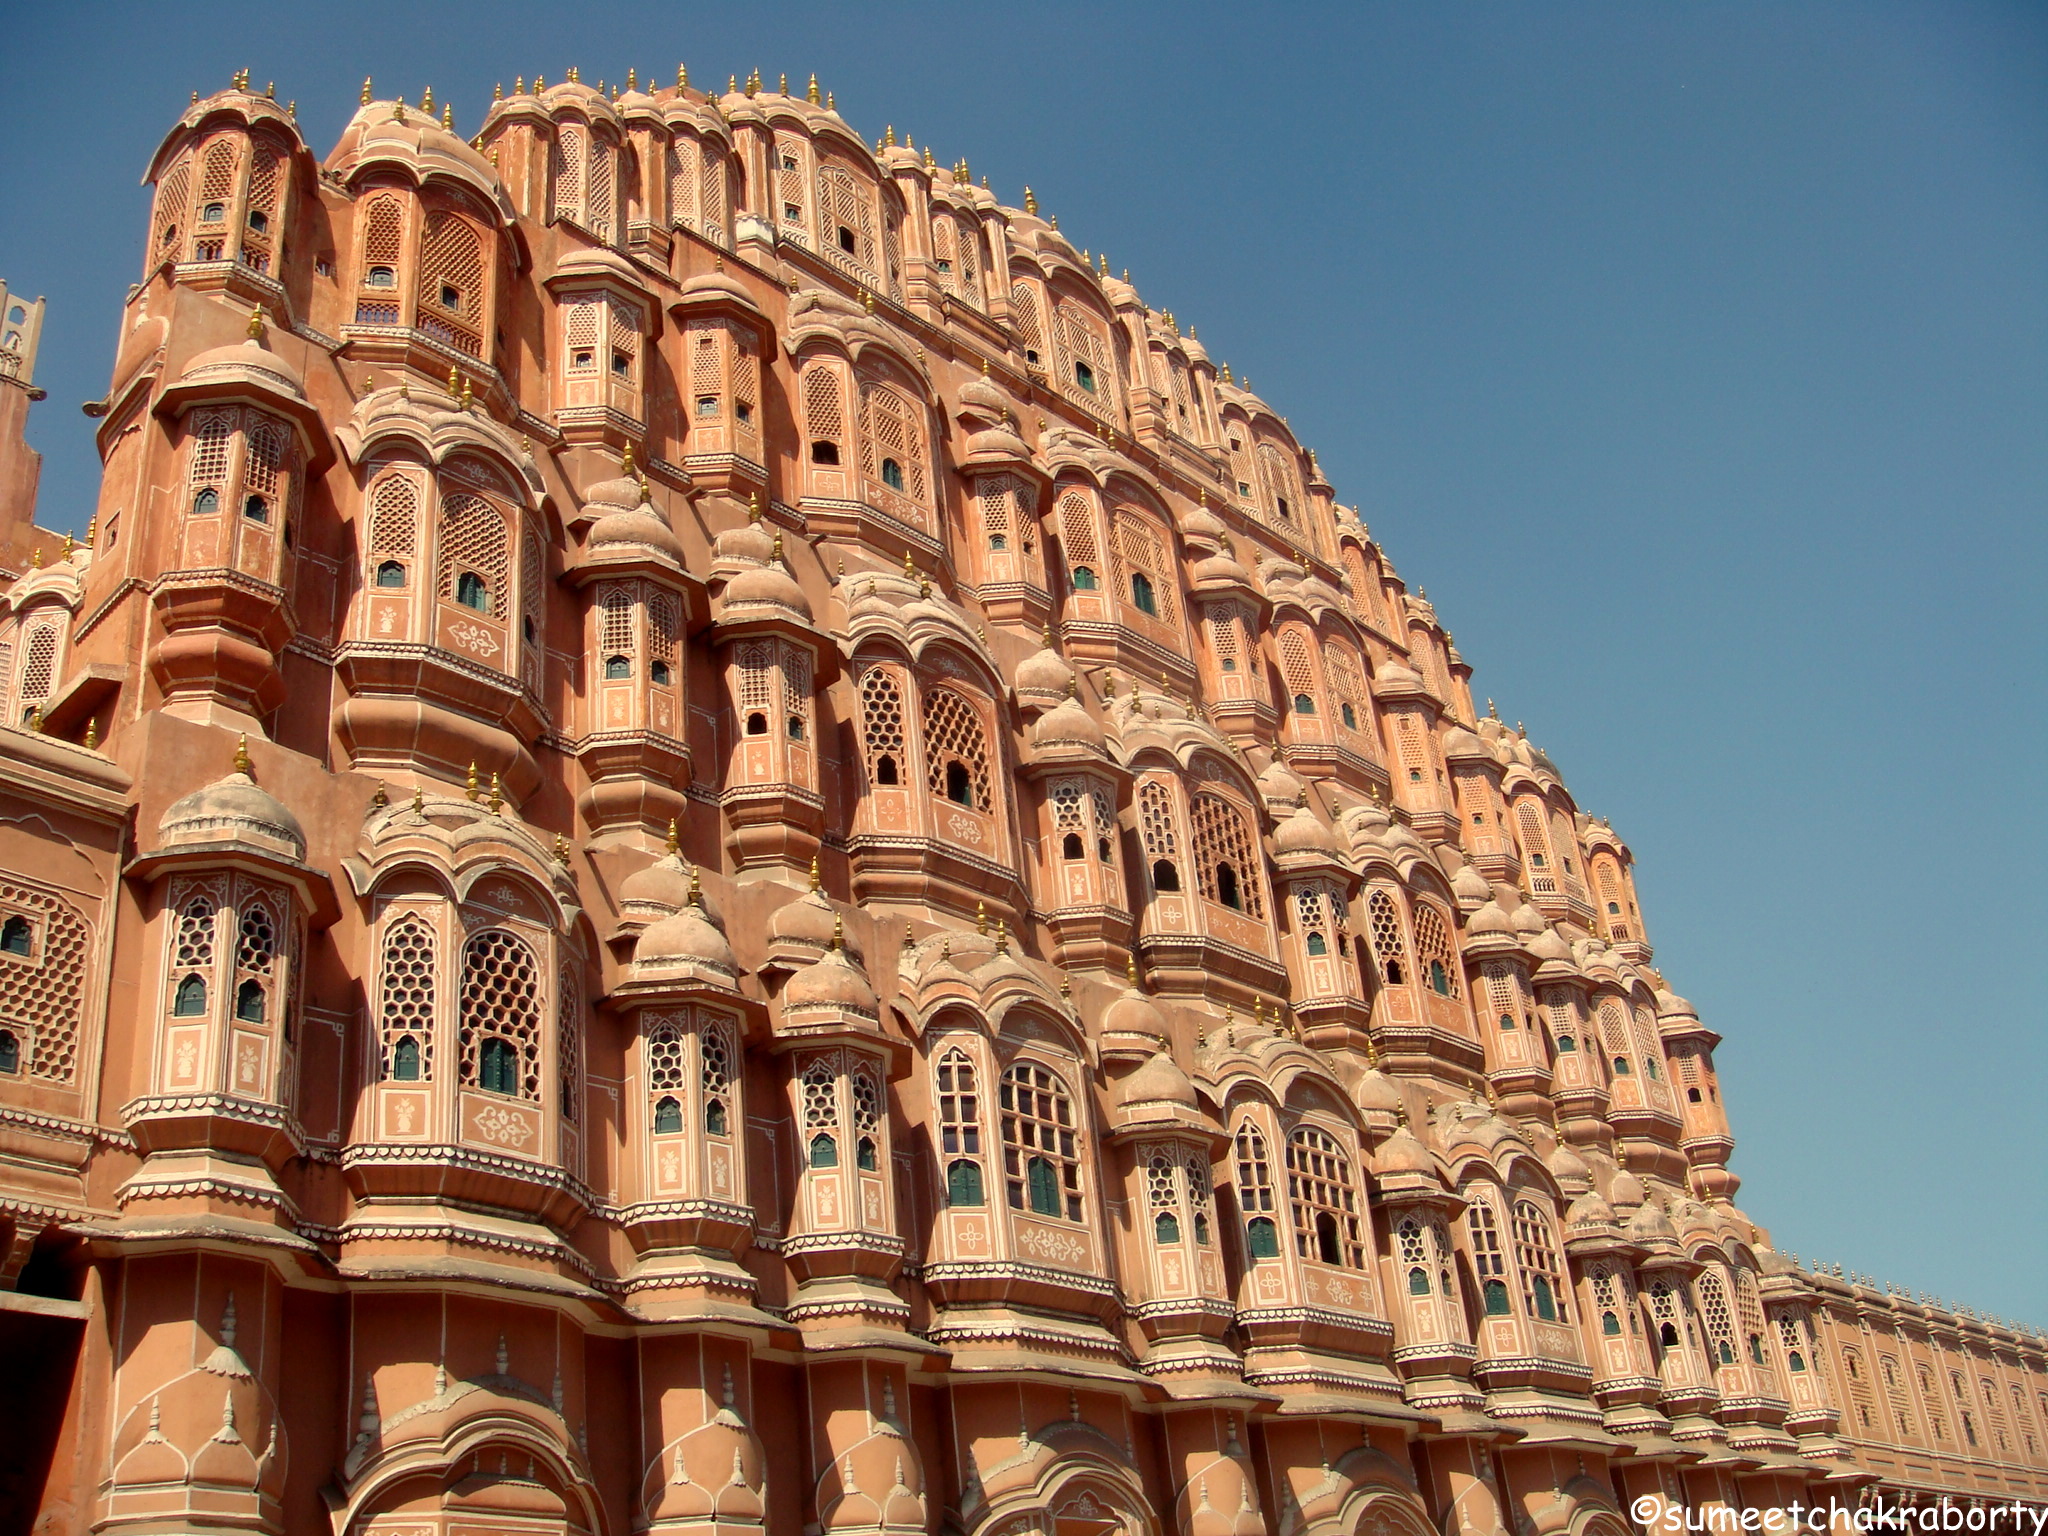 Hawa Mahal .. a sneak peek into Jaipur’s royal past